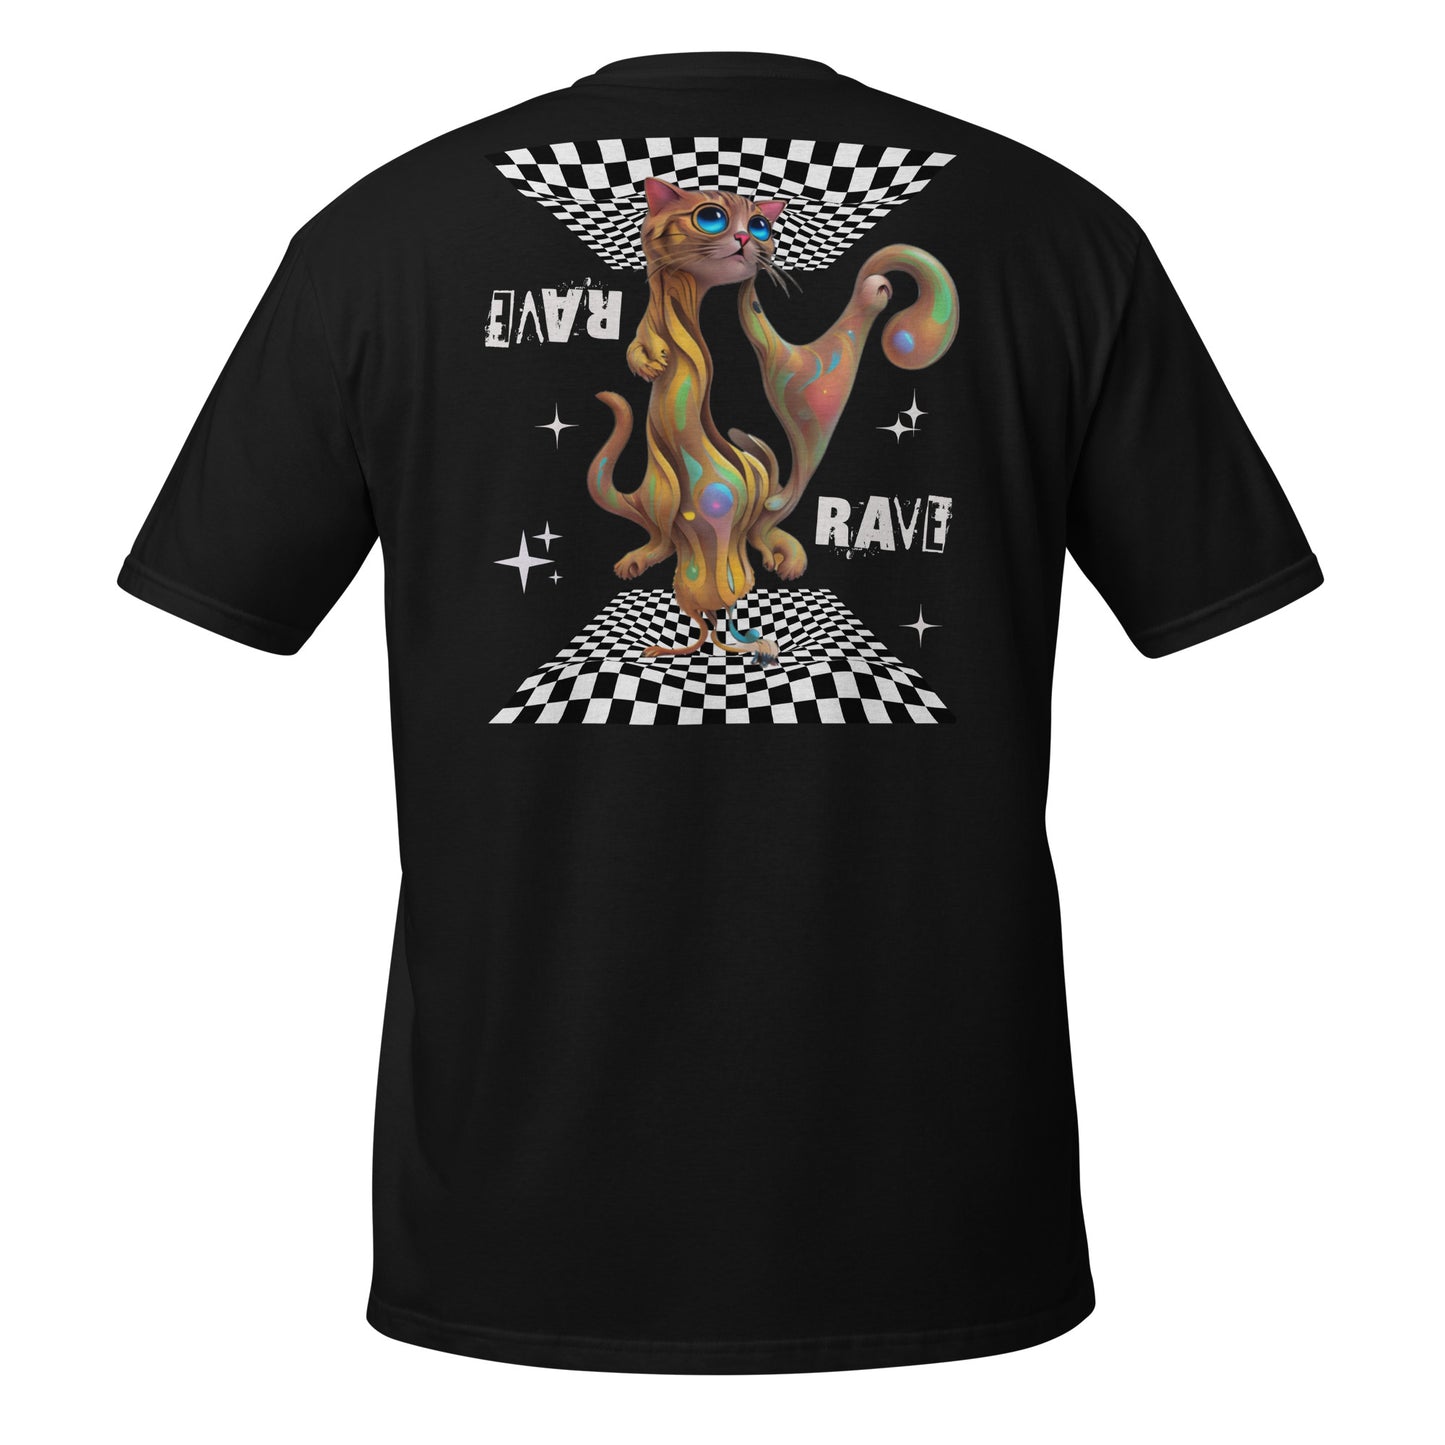 Gato rave - Camiseta techno unisex